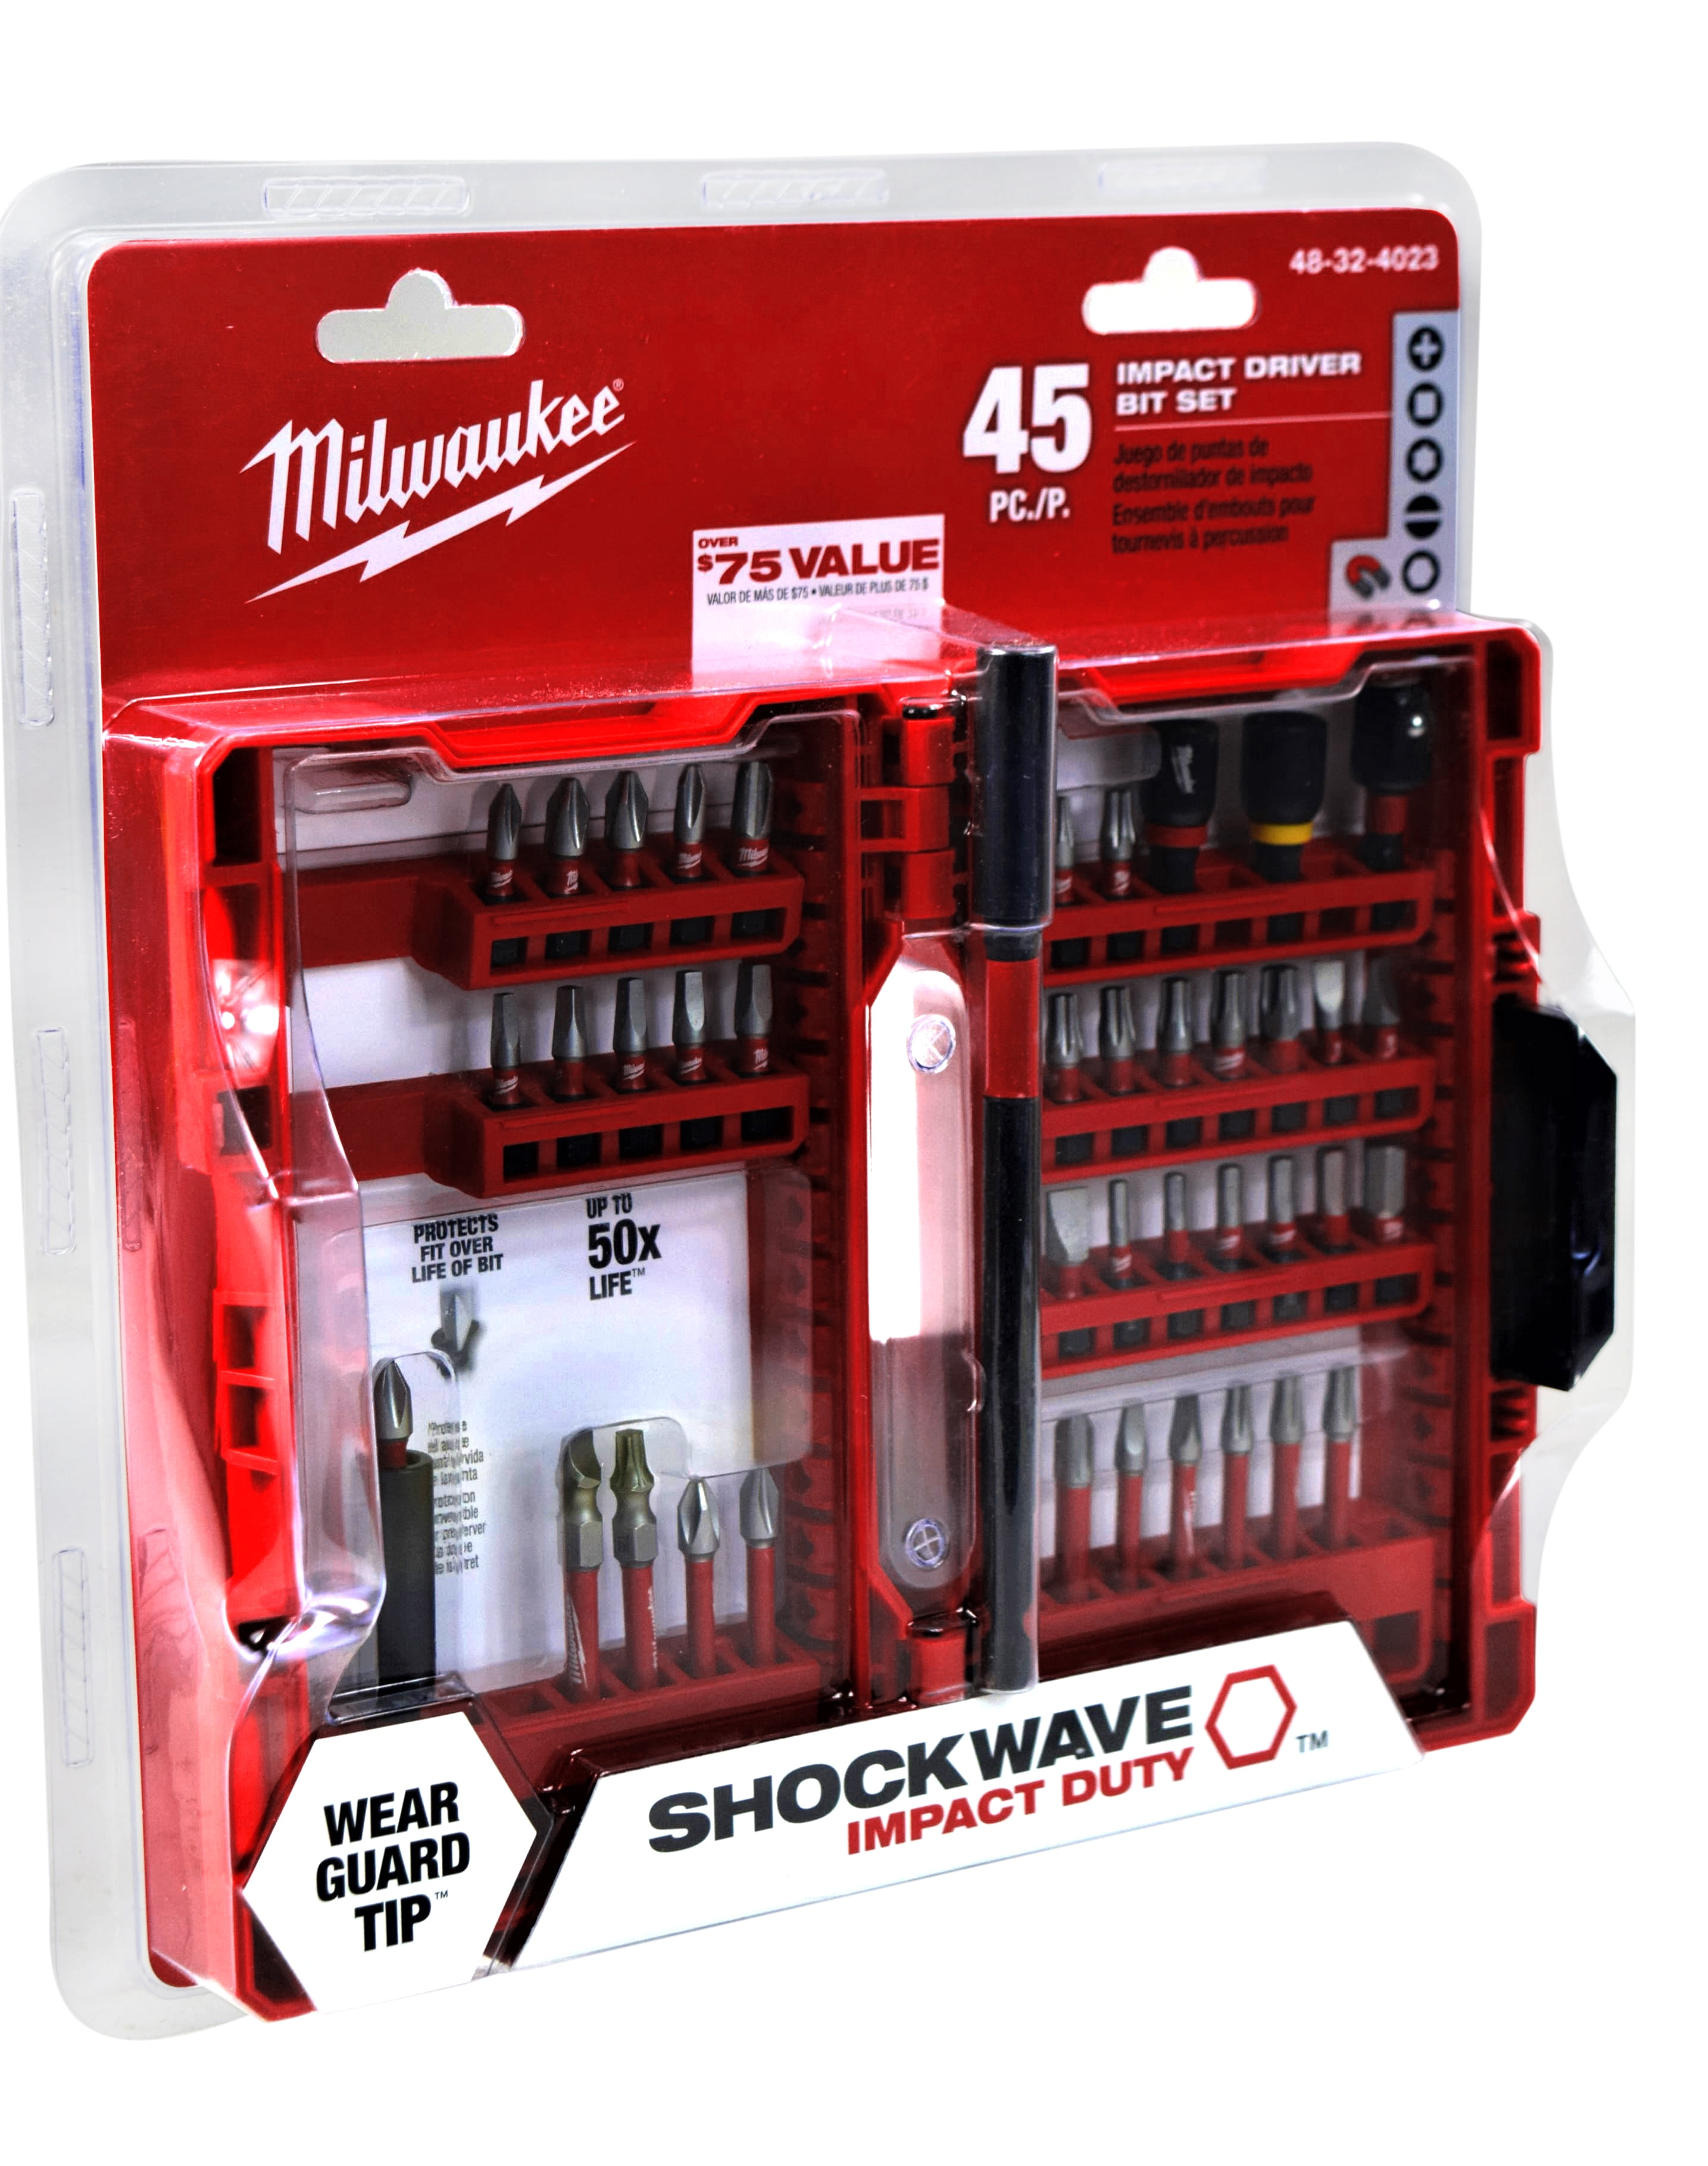 Details about   Milwaukee 48-32-4029 Shockwave 60Pc Impact Driver Bit Set 